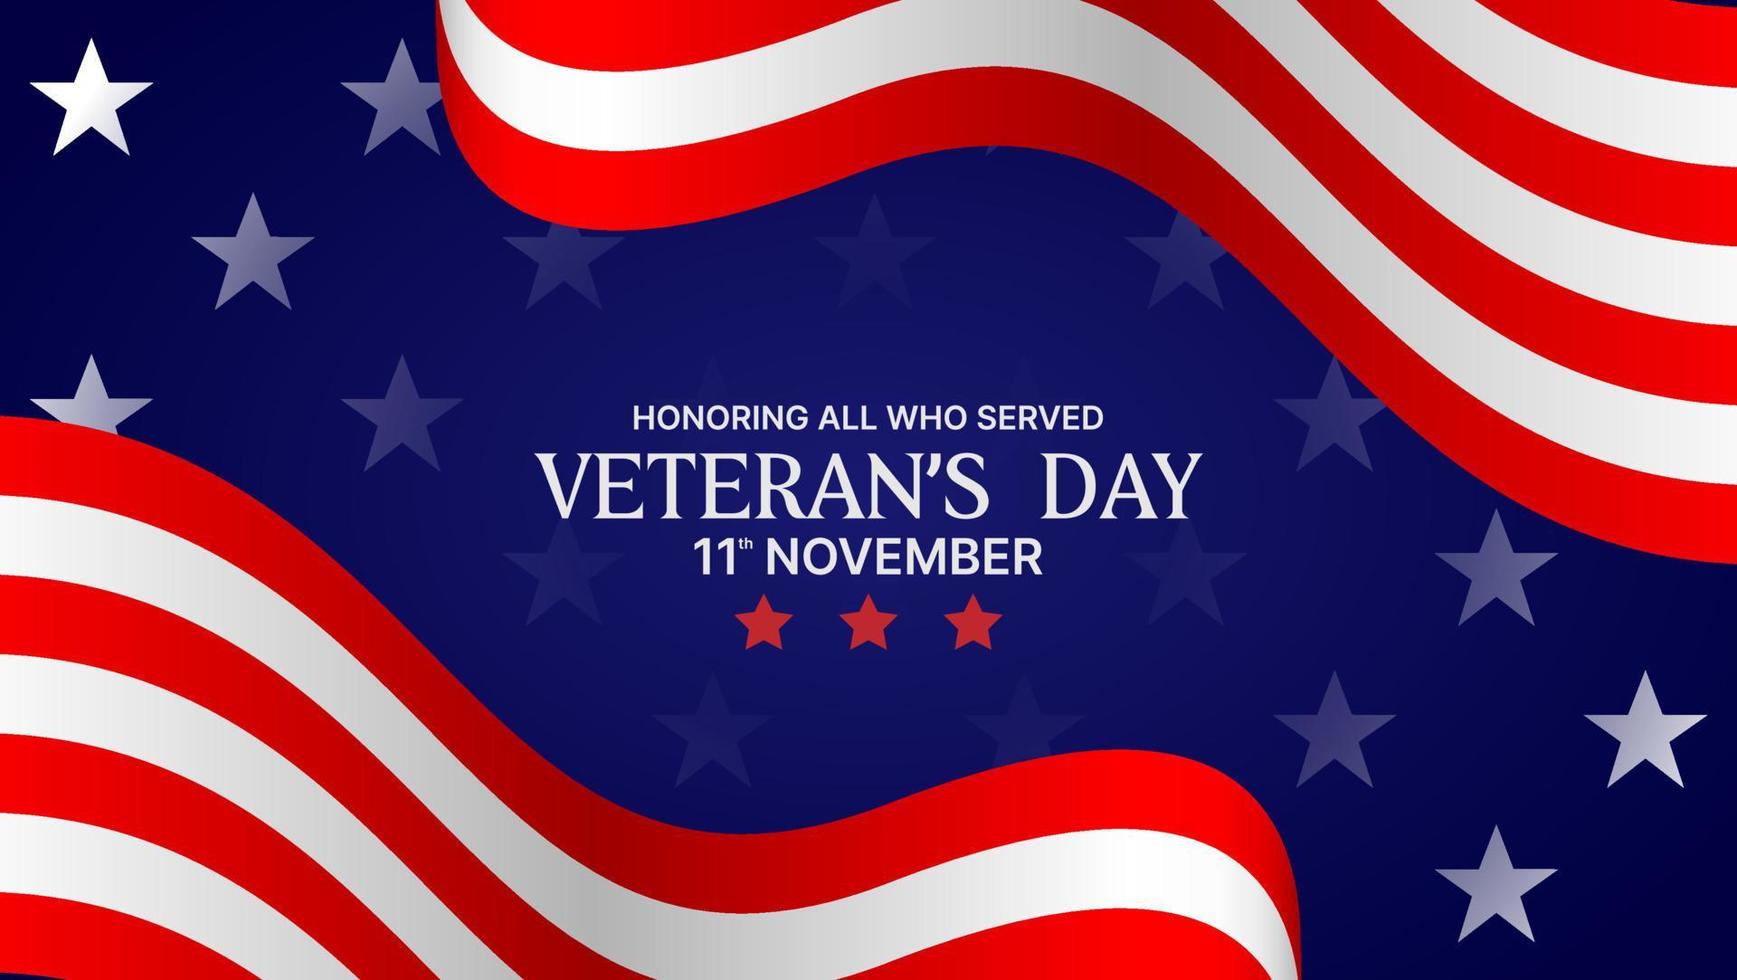 veteran's day background design for banner, poster, invitation or social media vector